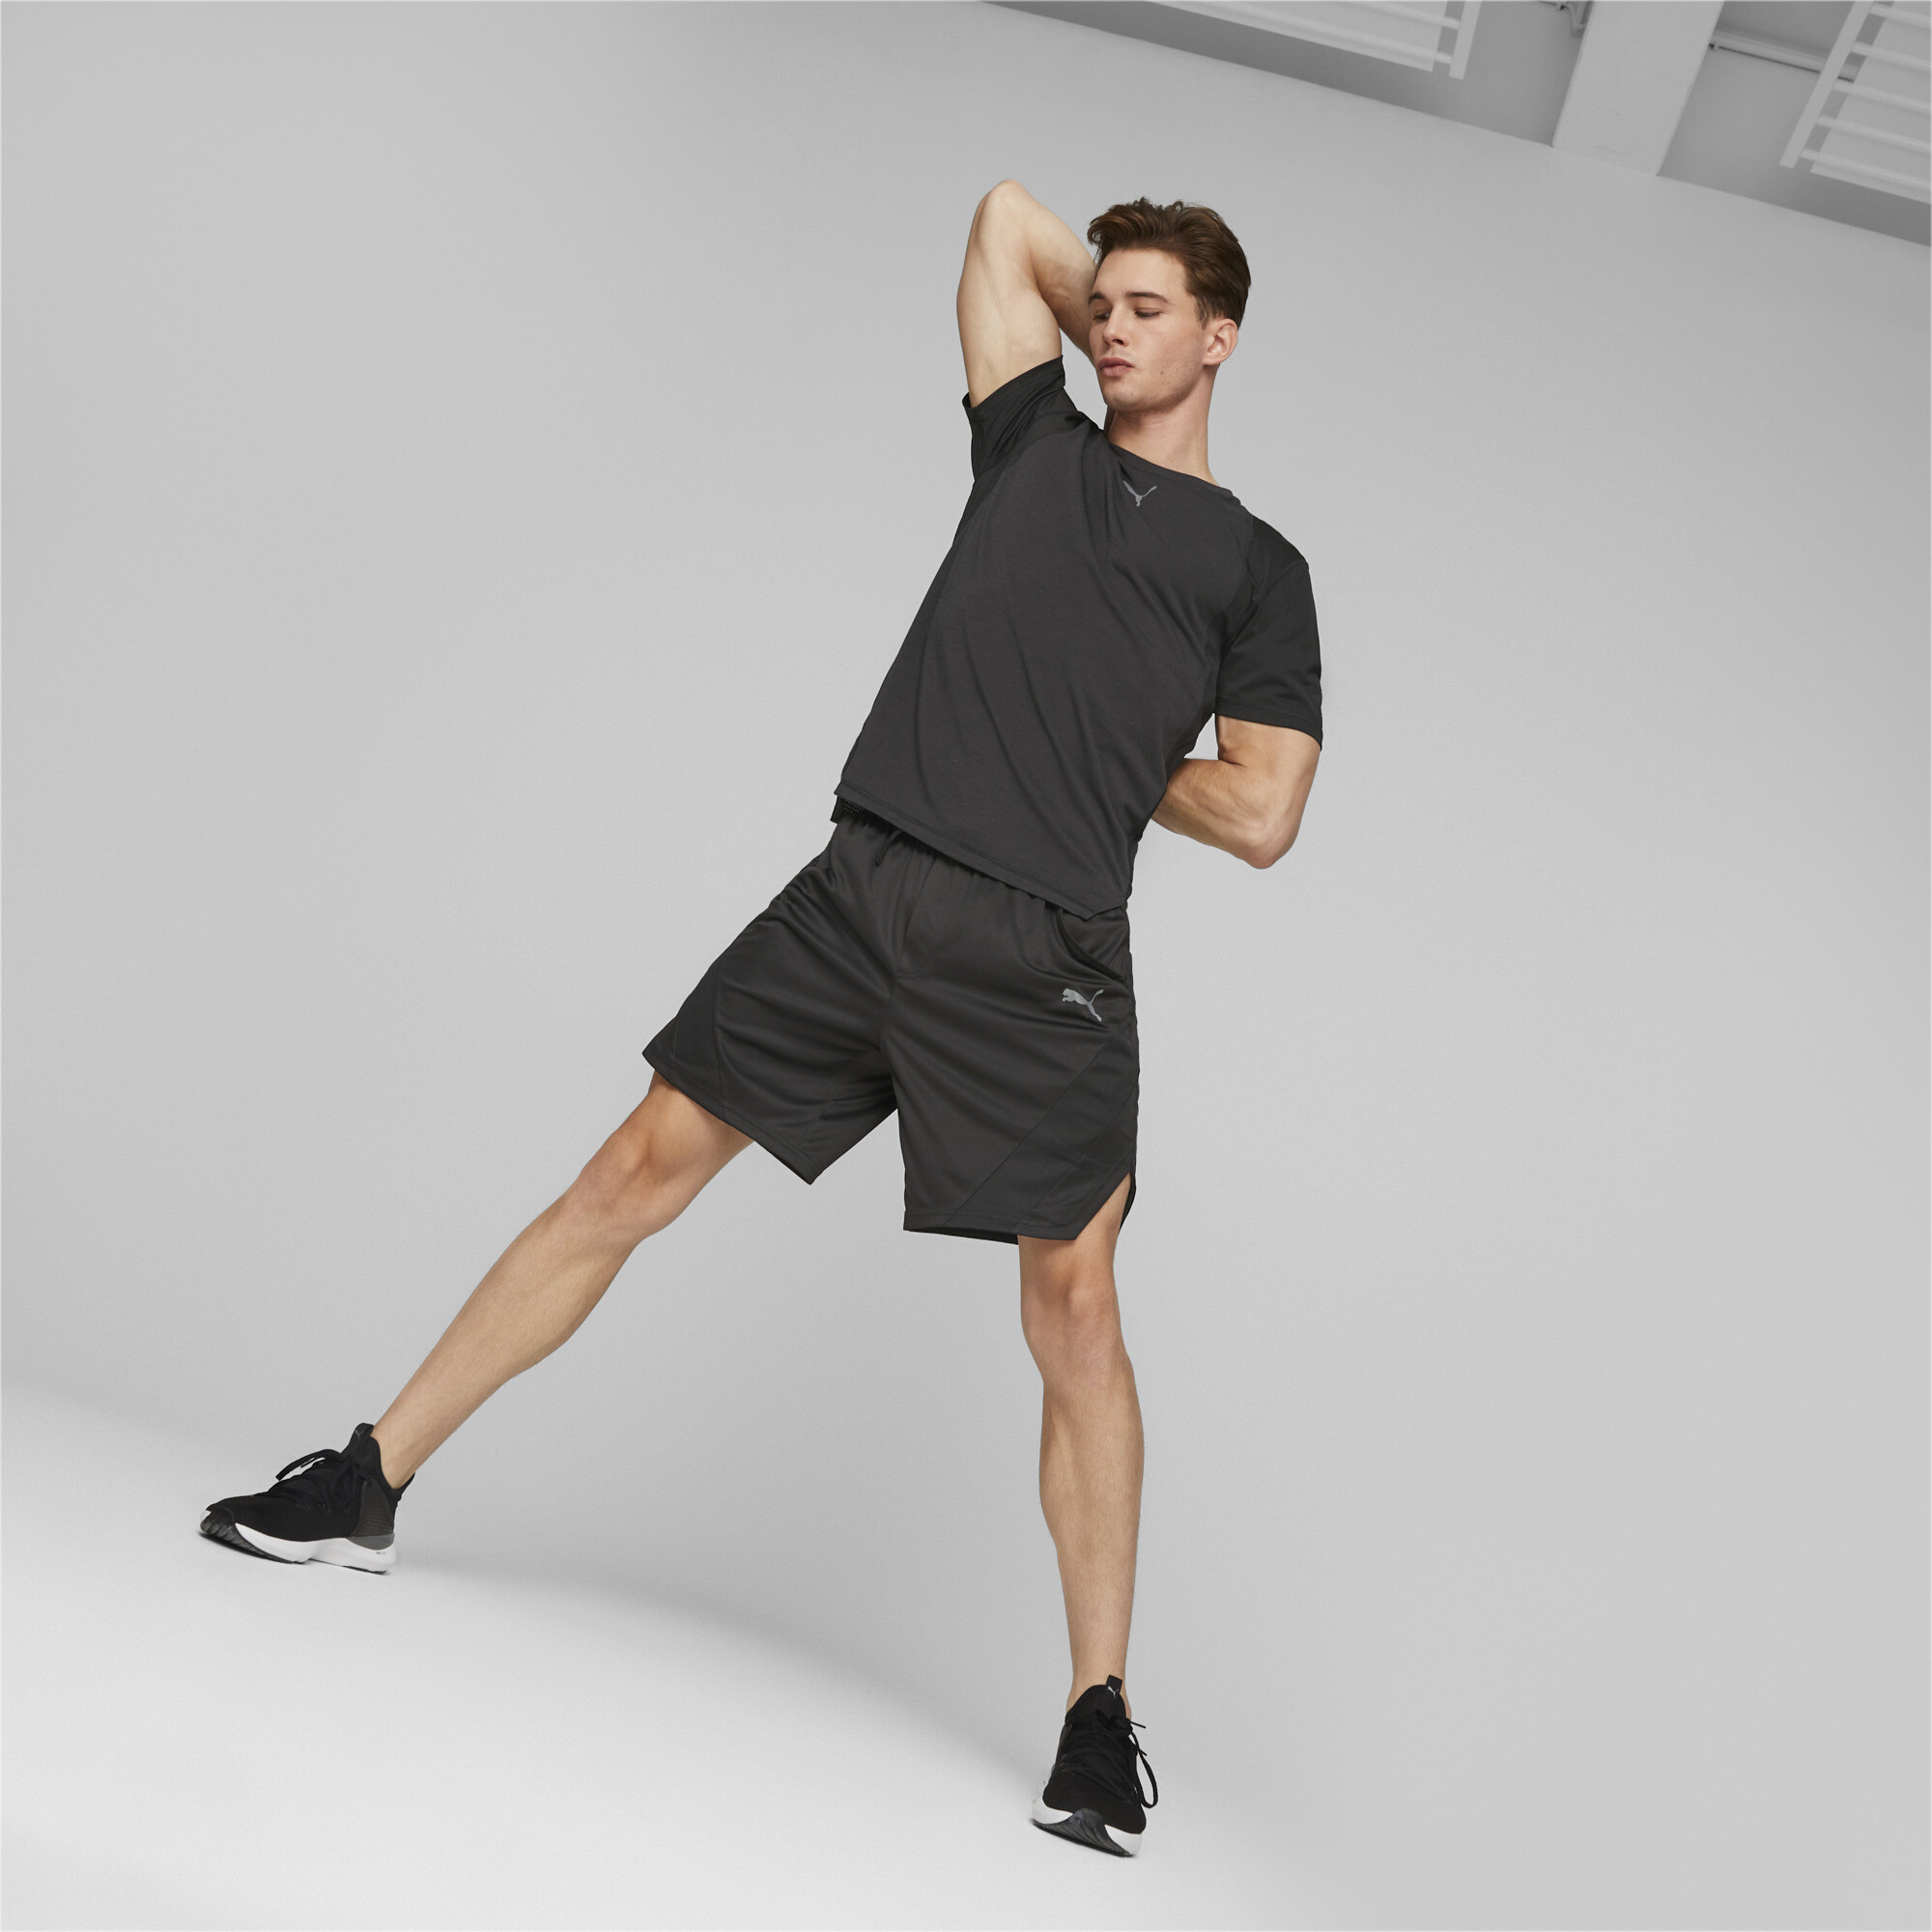 Men's PUMA Engineered For Strength Training T-Shirt Men In 10 - Black, Size Medium